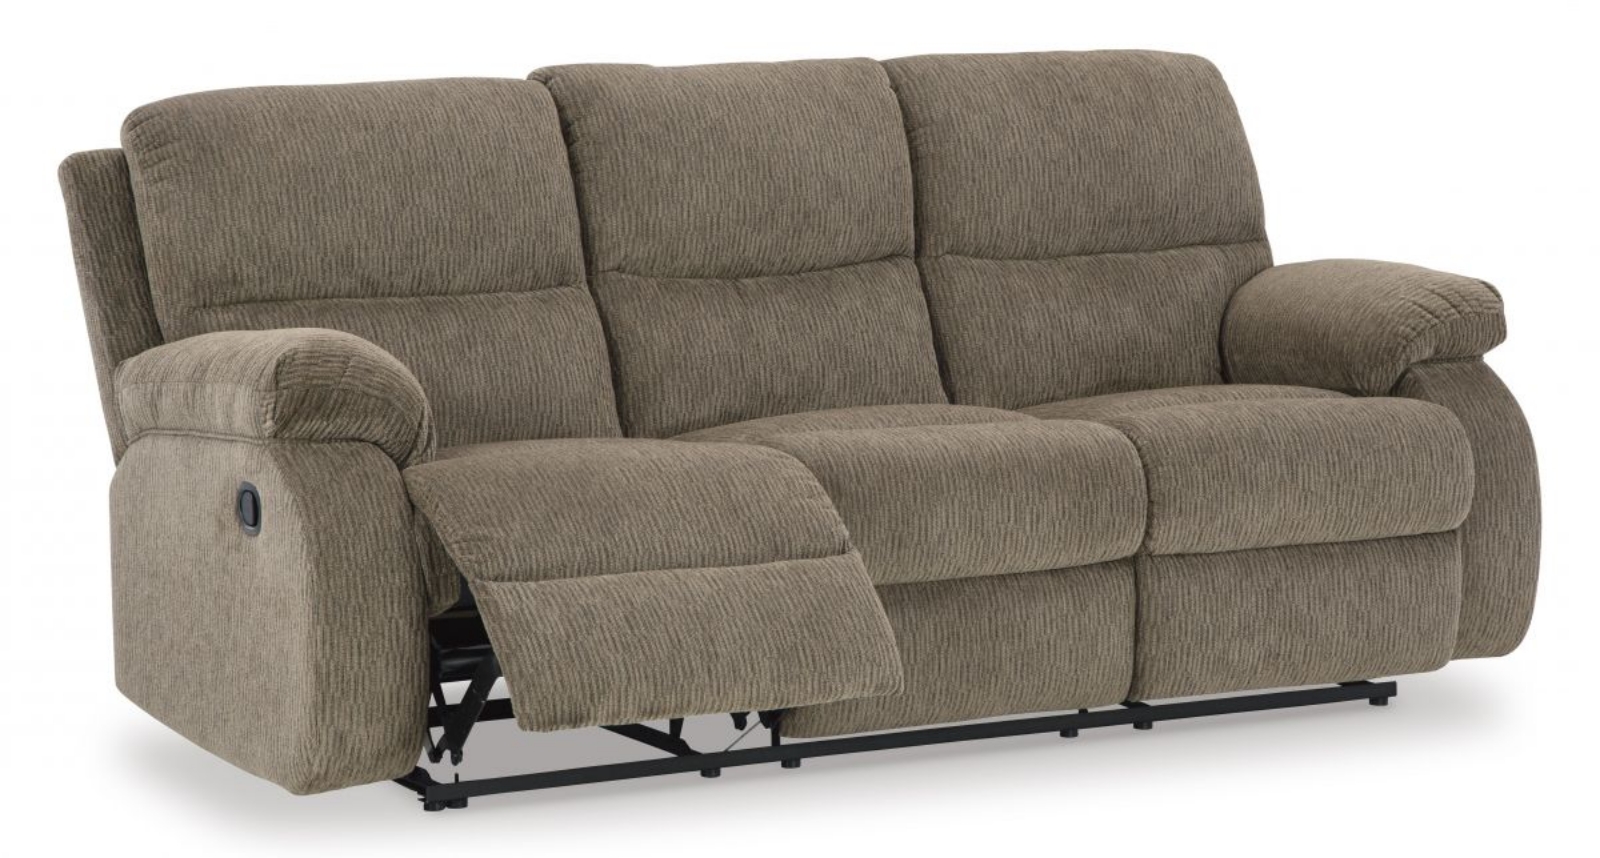 Picture of Scranto Reclining Sofa